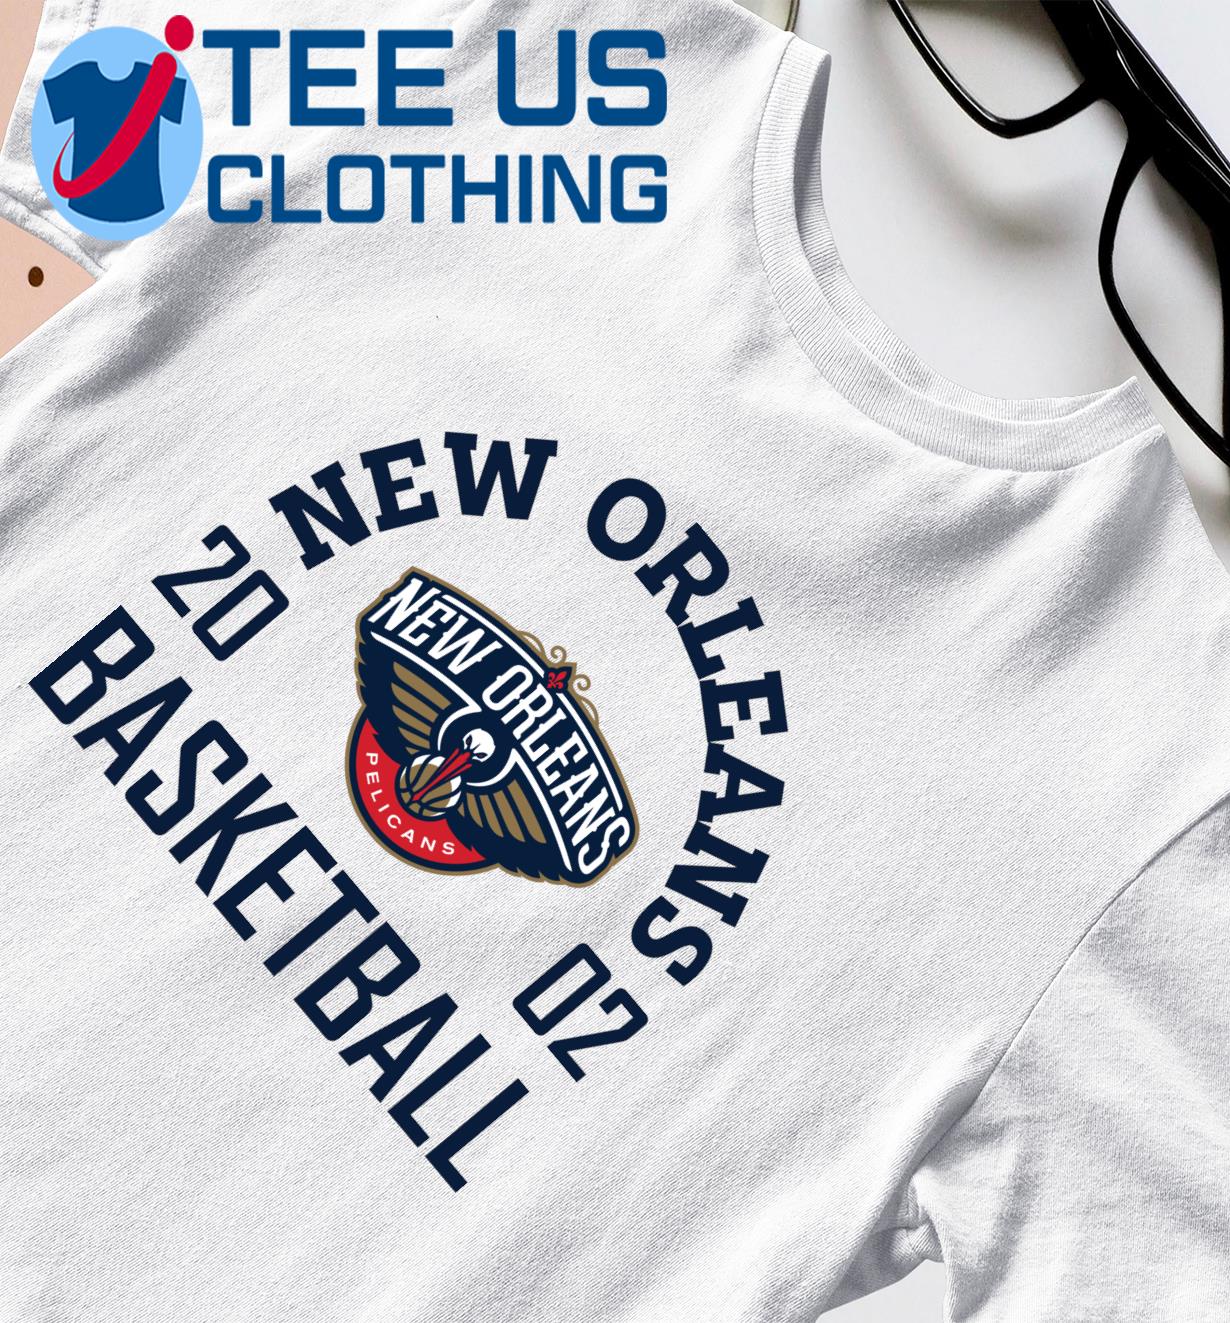 New Orleans Pelicans Basketball 2002 shirt